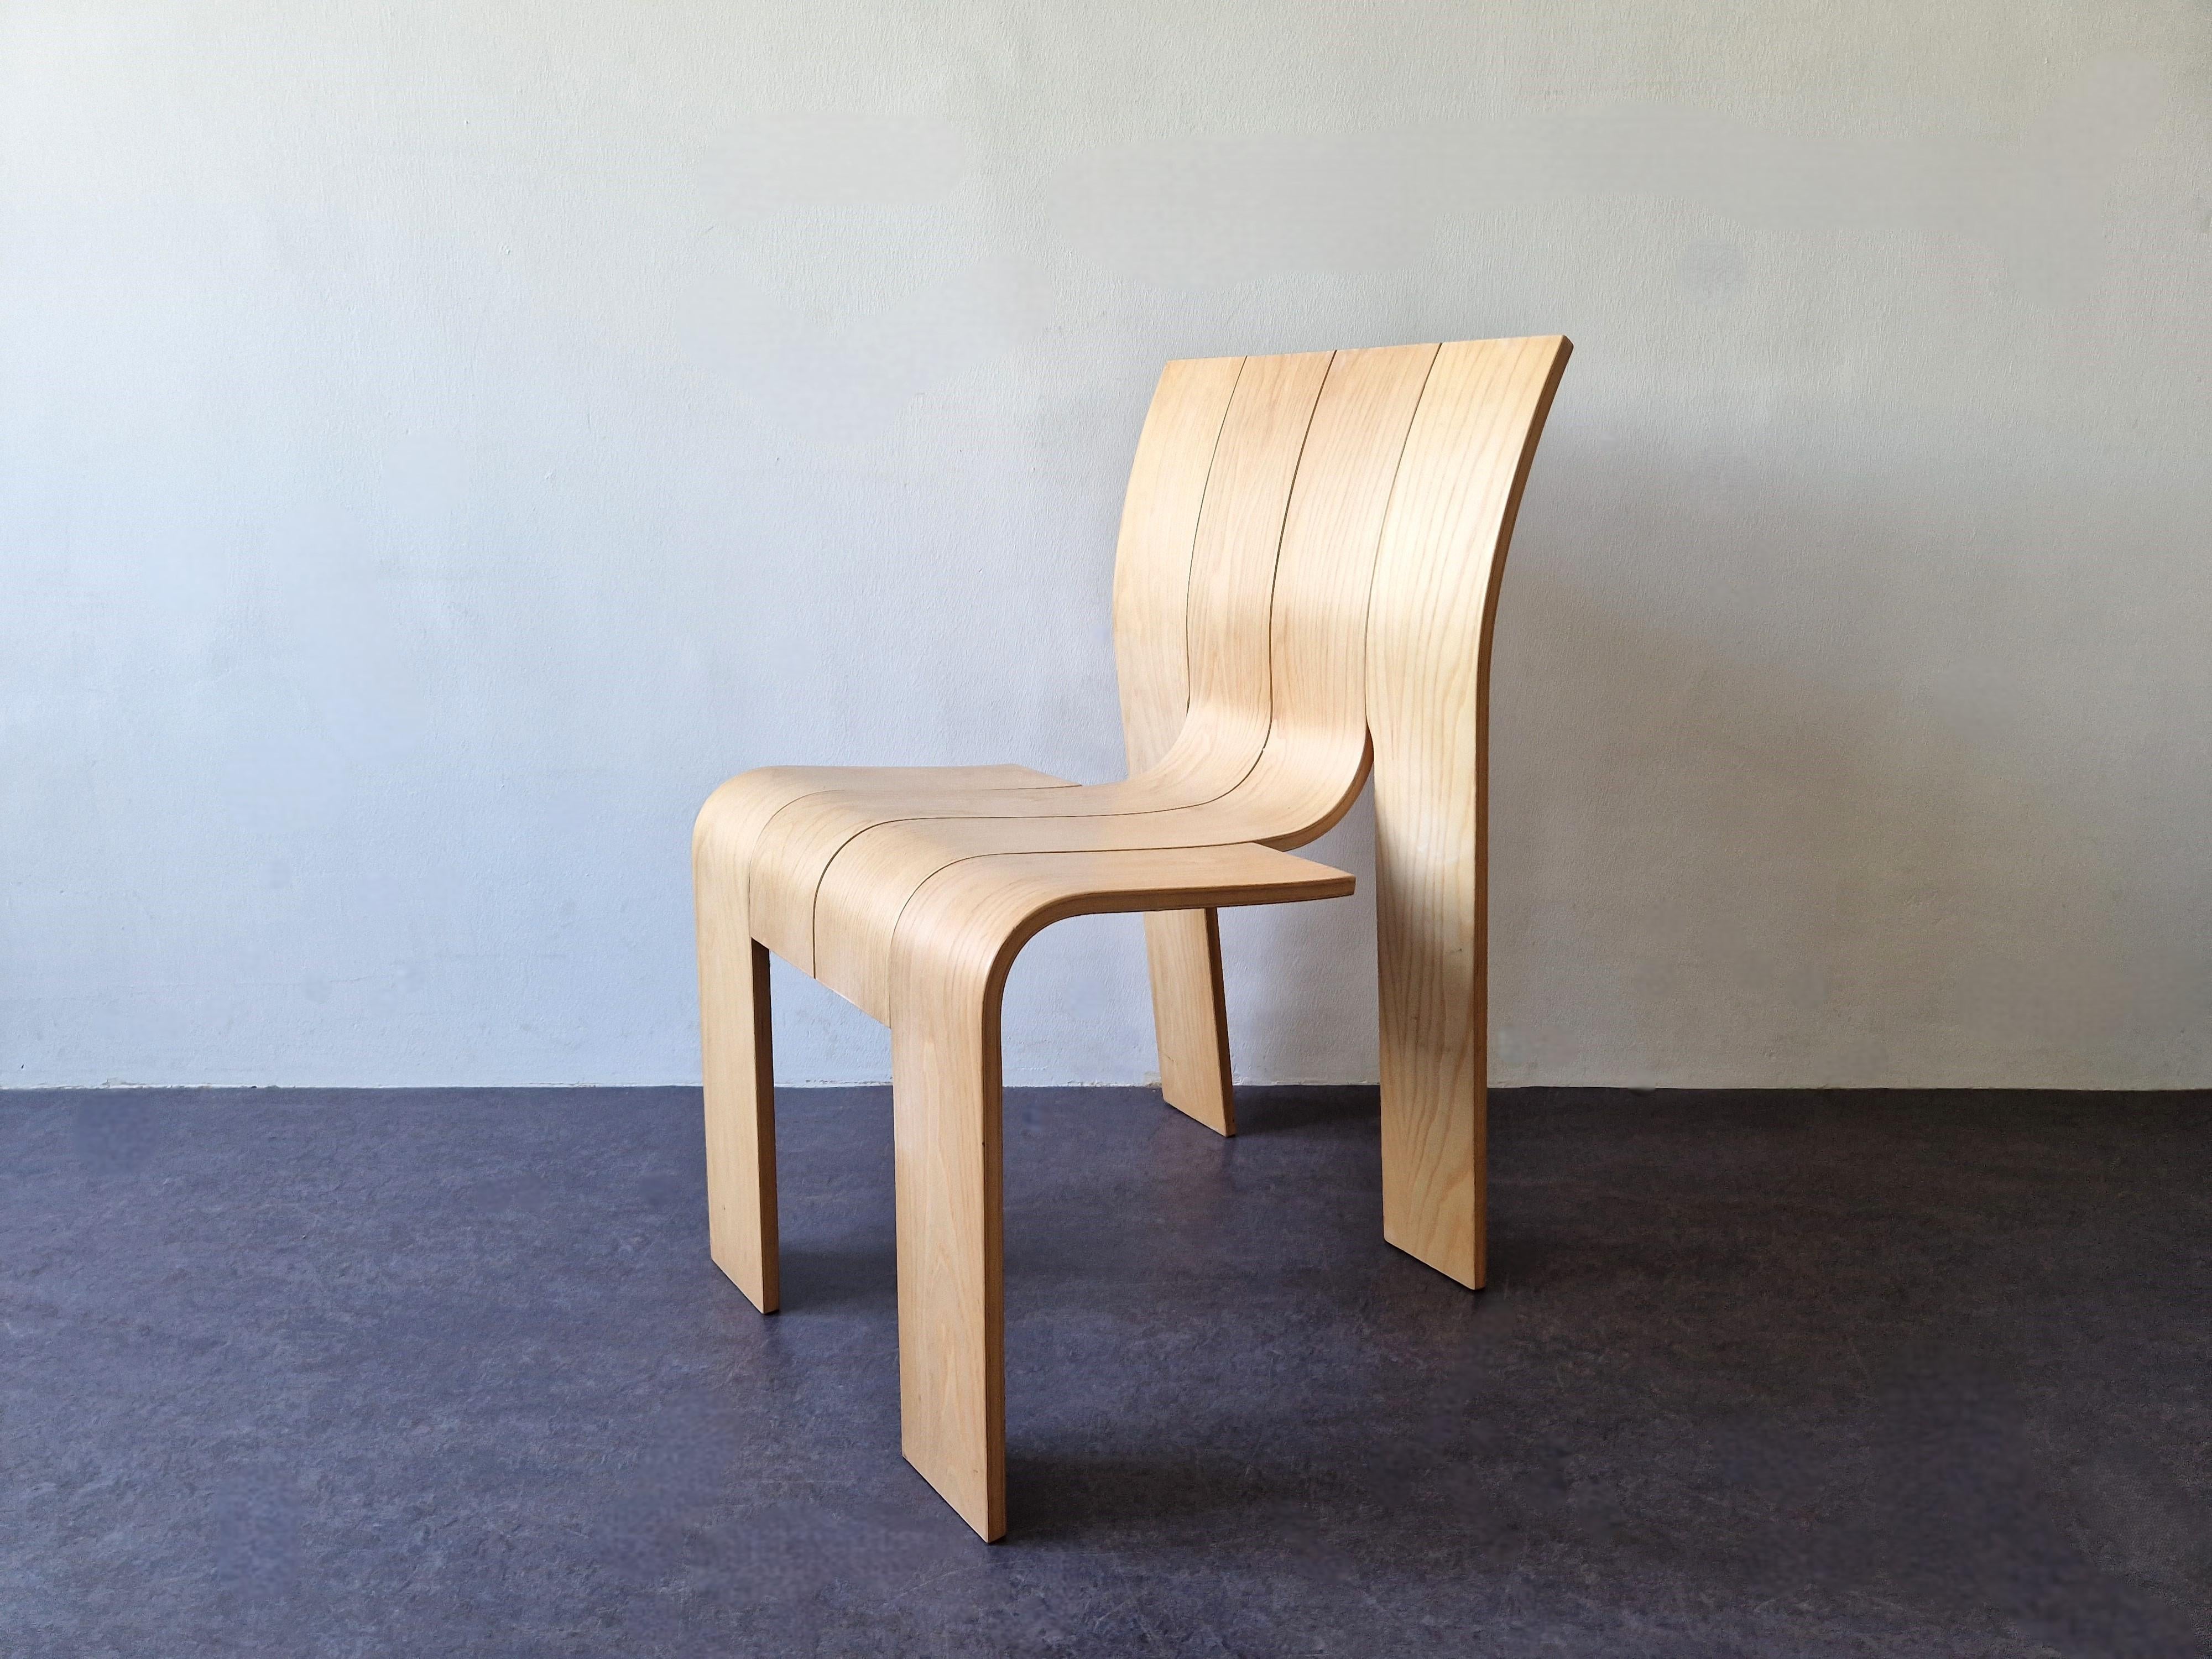 Laminated Set of 4 Strip chairs by Gijs Bakker for Castelijn, The Netherlands 1970's For Sale